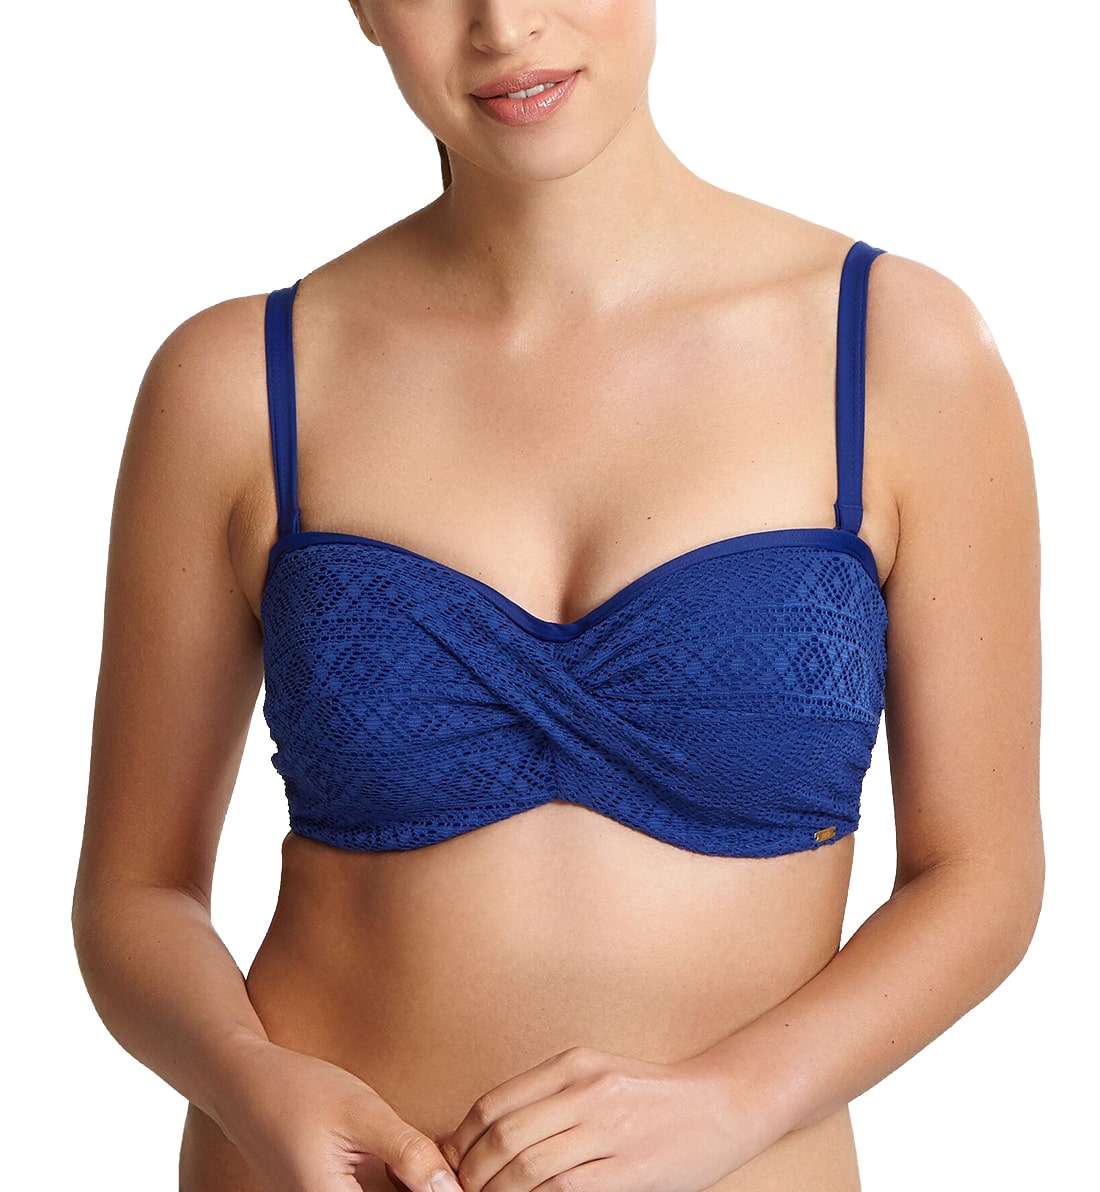 Panache Anya Crochet Twist Bandeau Underwire Bikini (SW1253),30G,French Blue - French Blue,30G